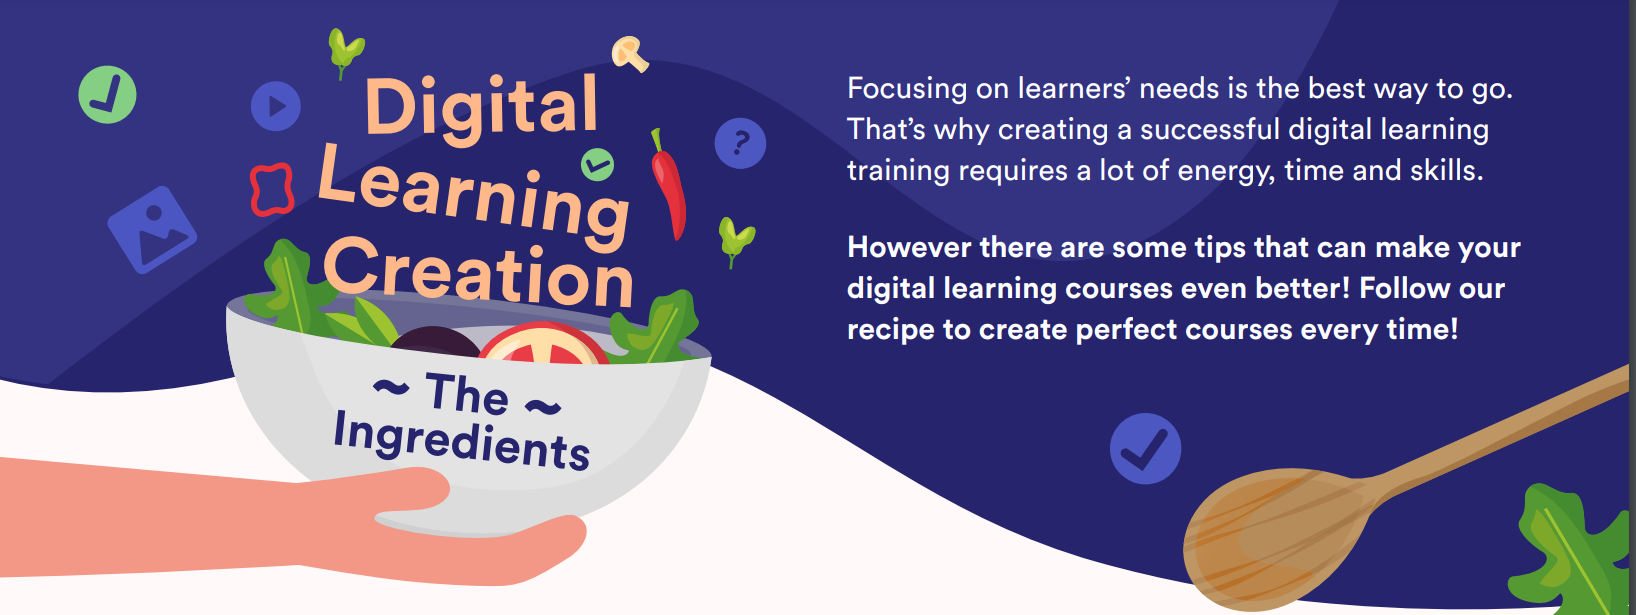 digital learning creation header